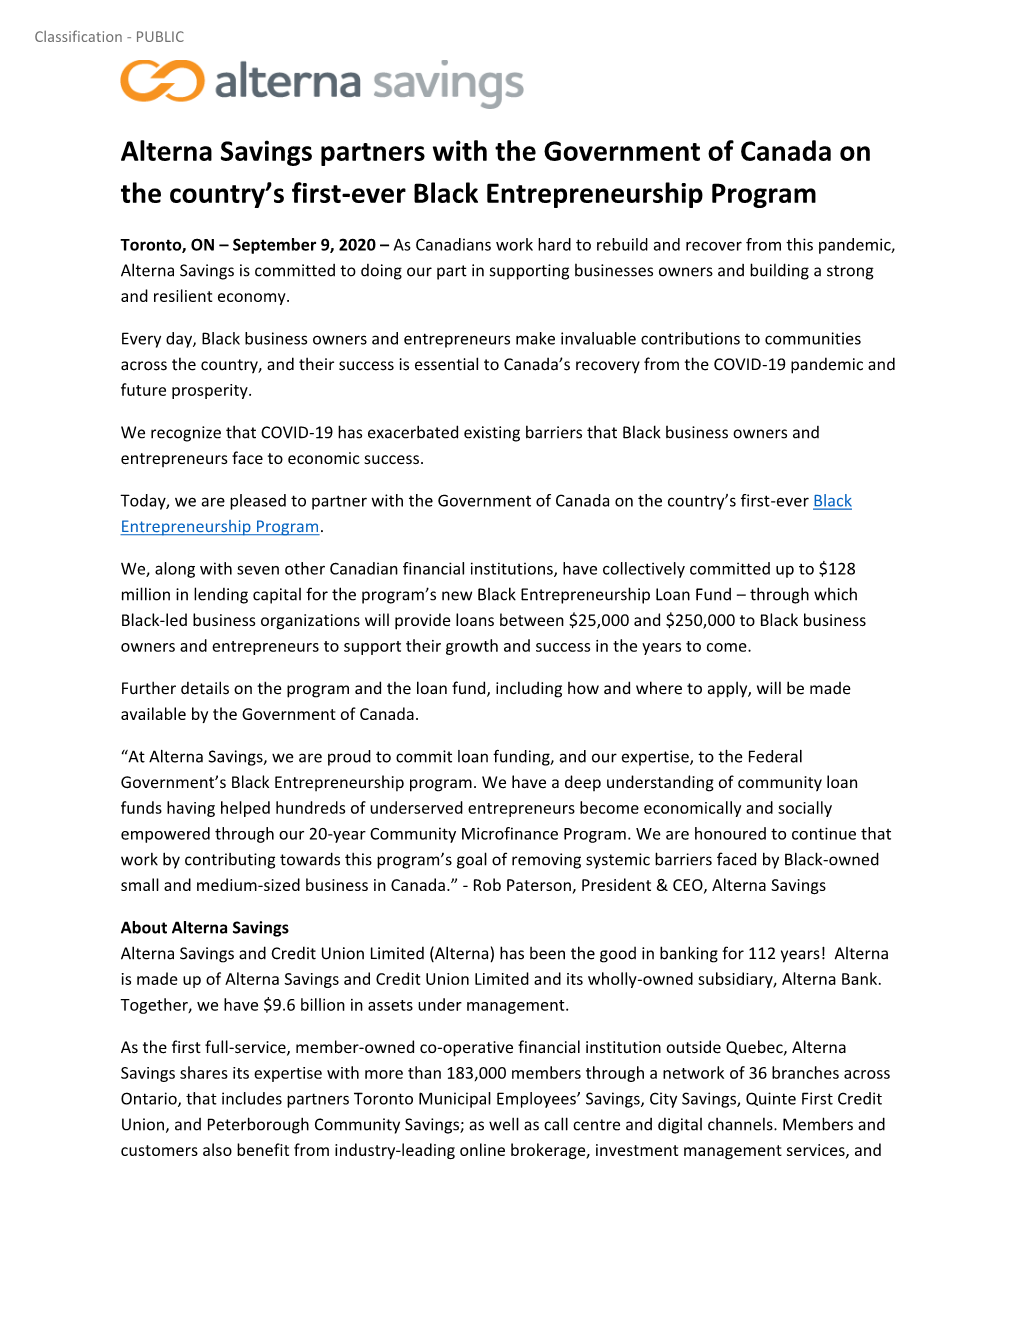 Black-Entrepreneurship-Program.Pdf